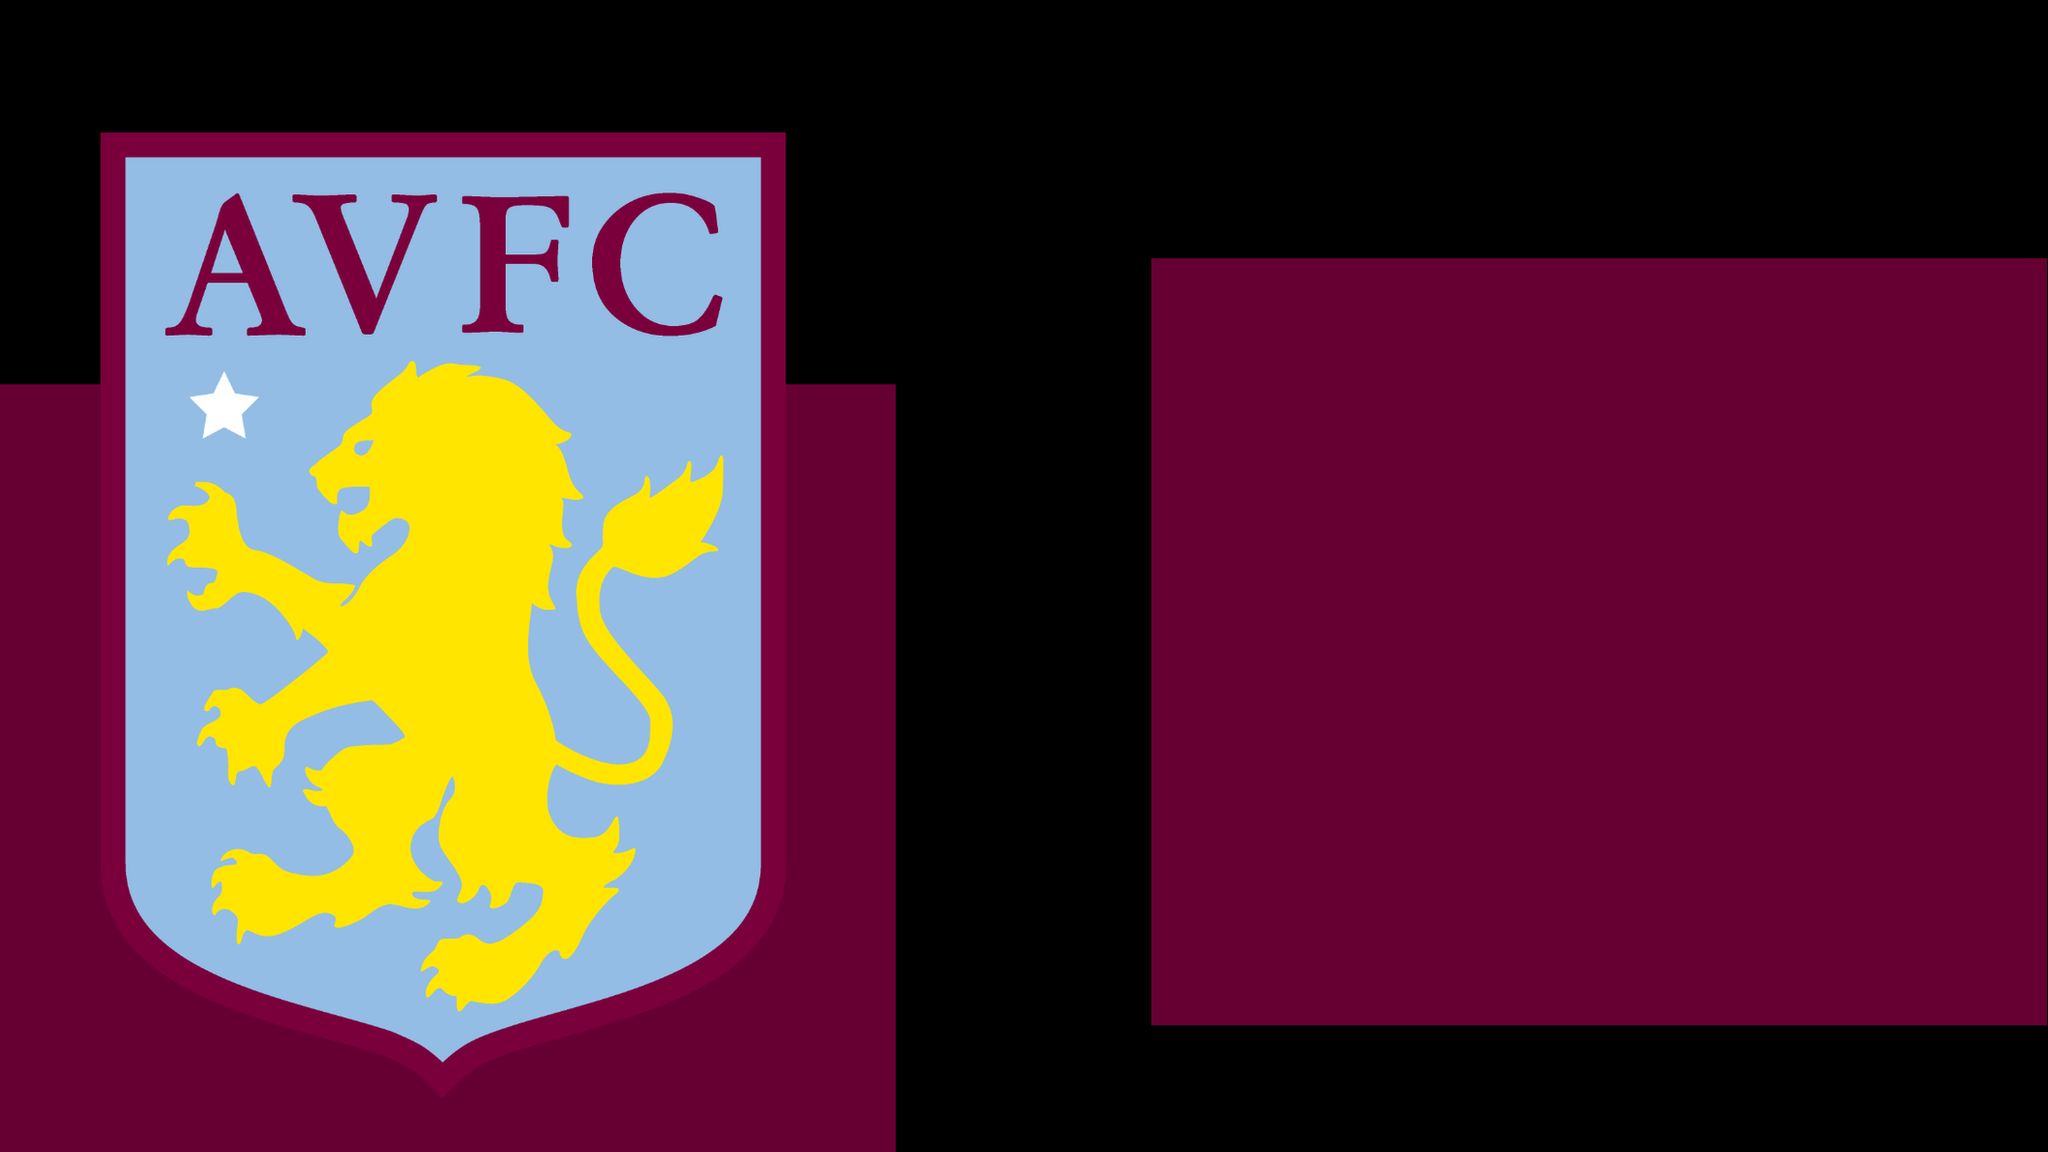 Aston Villa badge